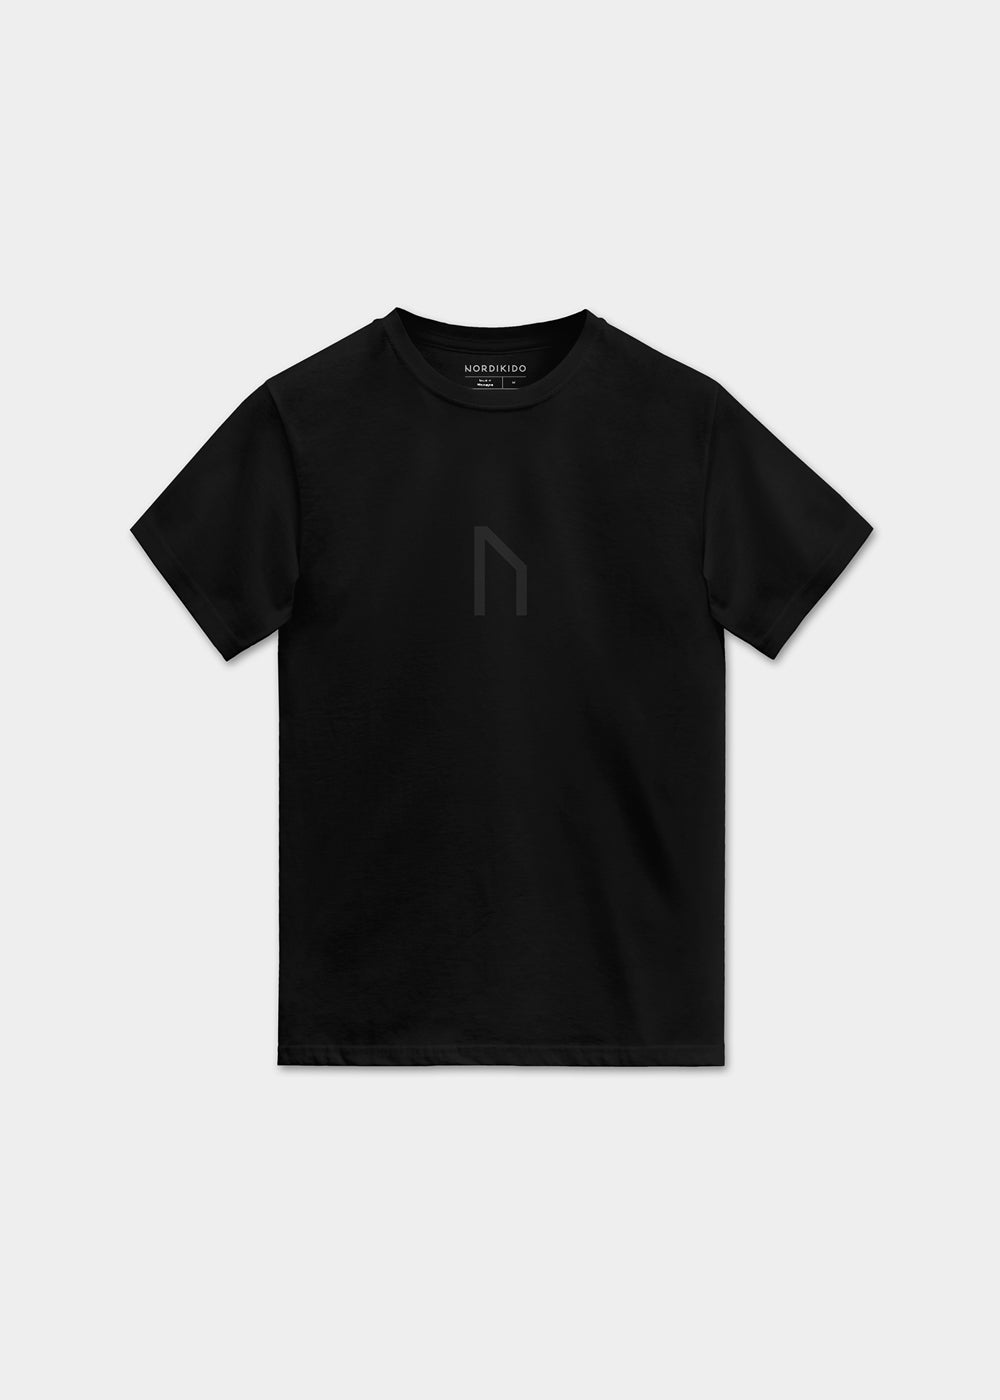 Uruz Elder Futhark Rune T-shirt black that reflects Viking Culture and Minimalist Design